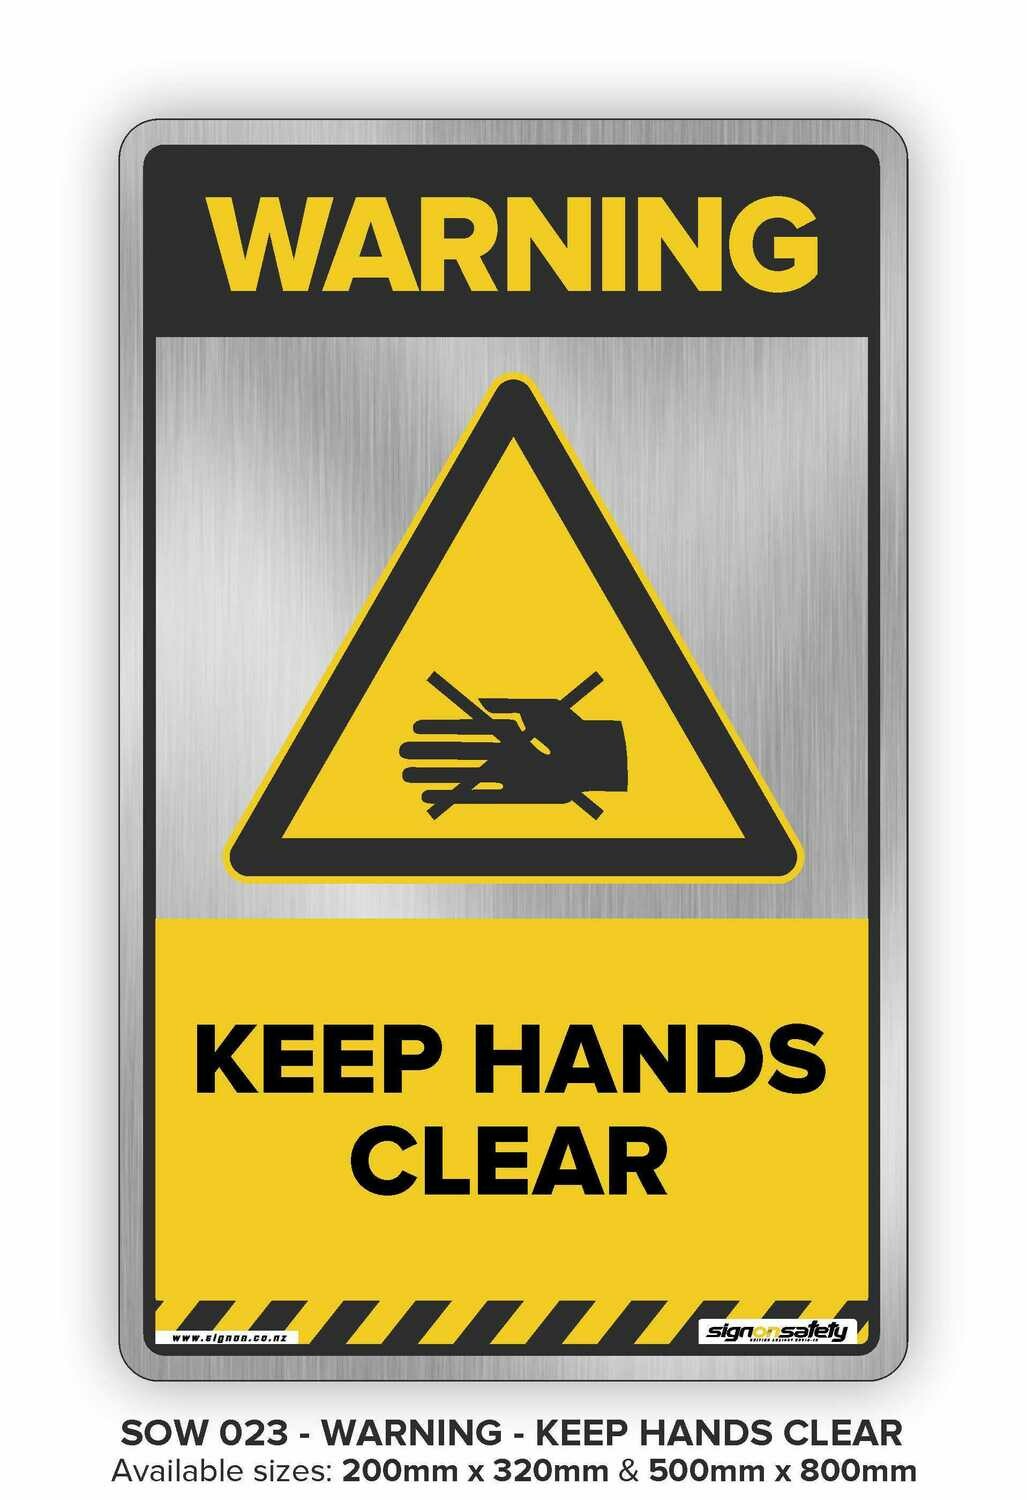 Warning - Keep Hands Clear